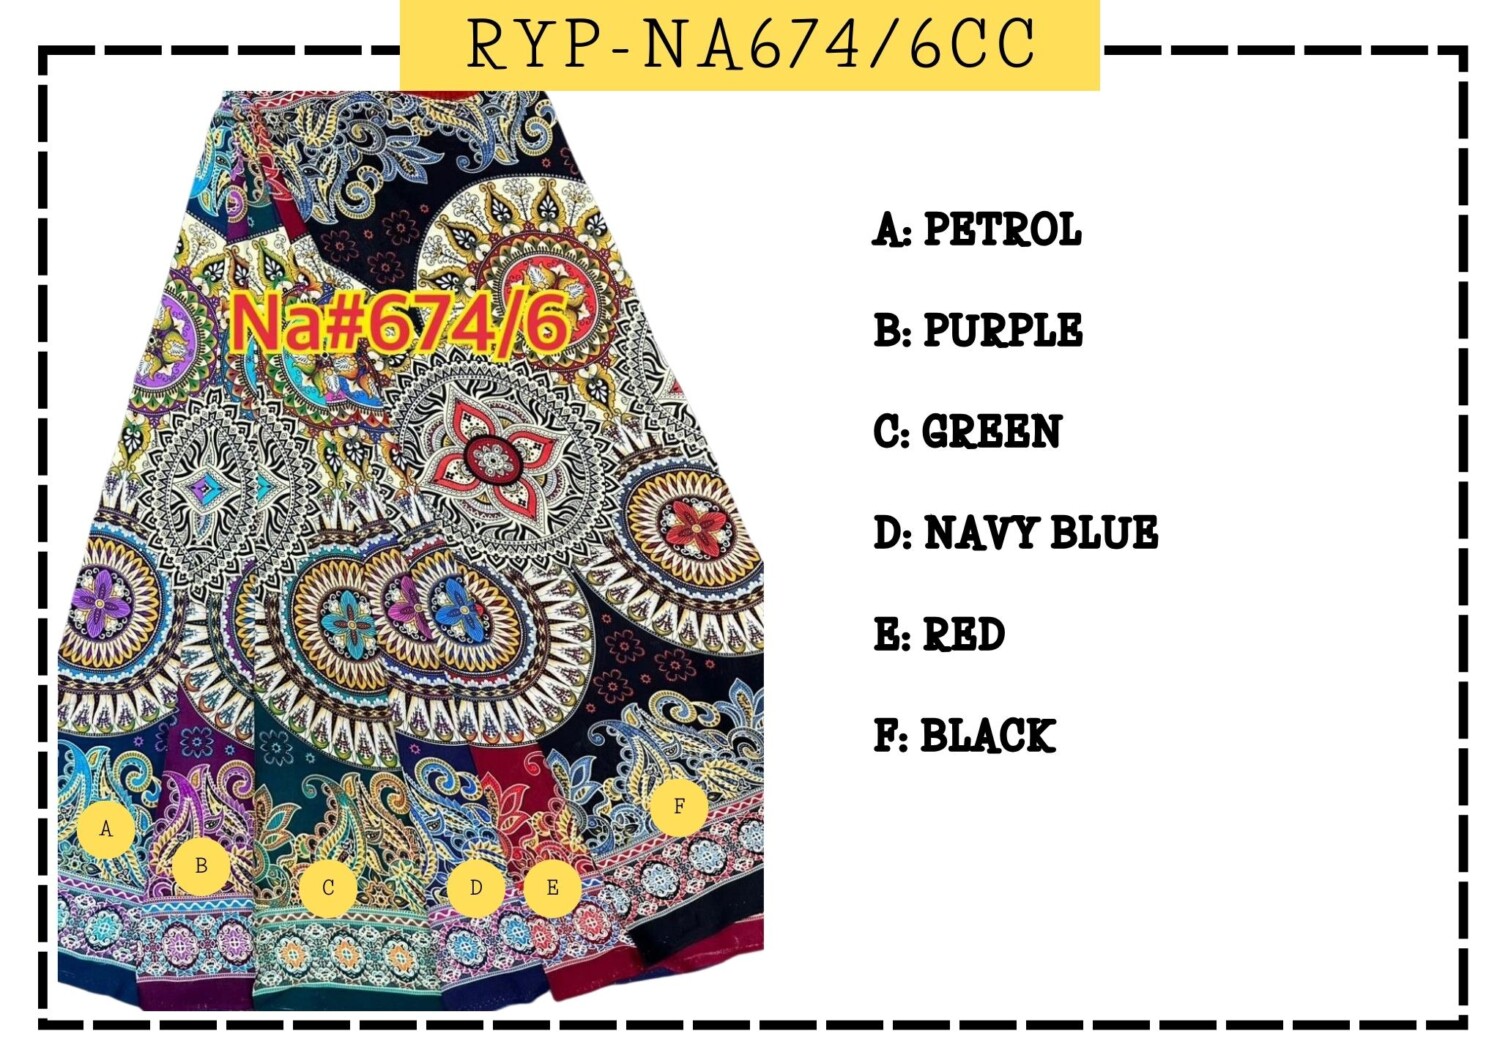 RYP NA674 6CC